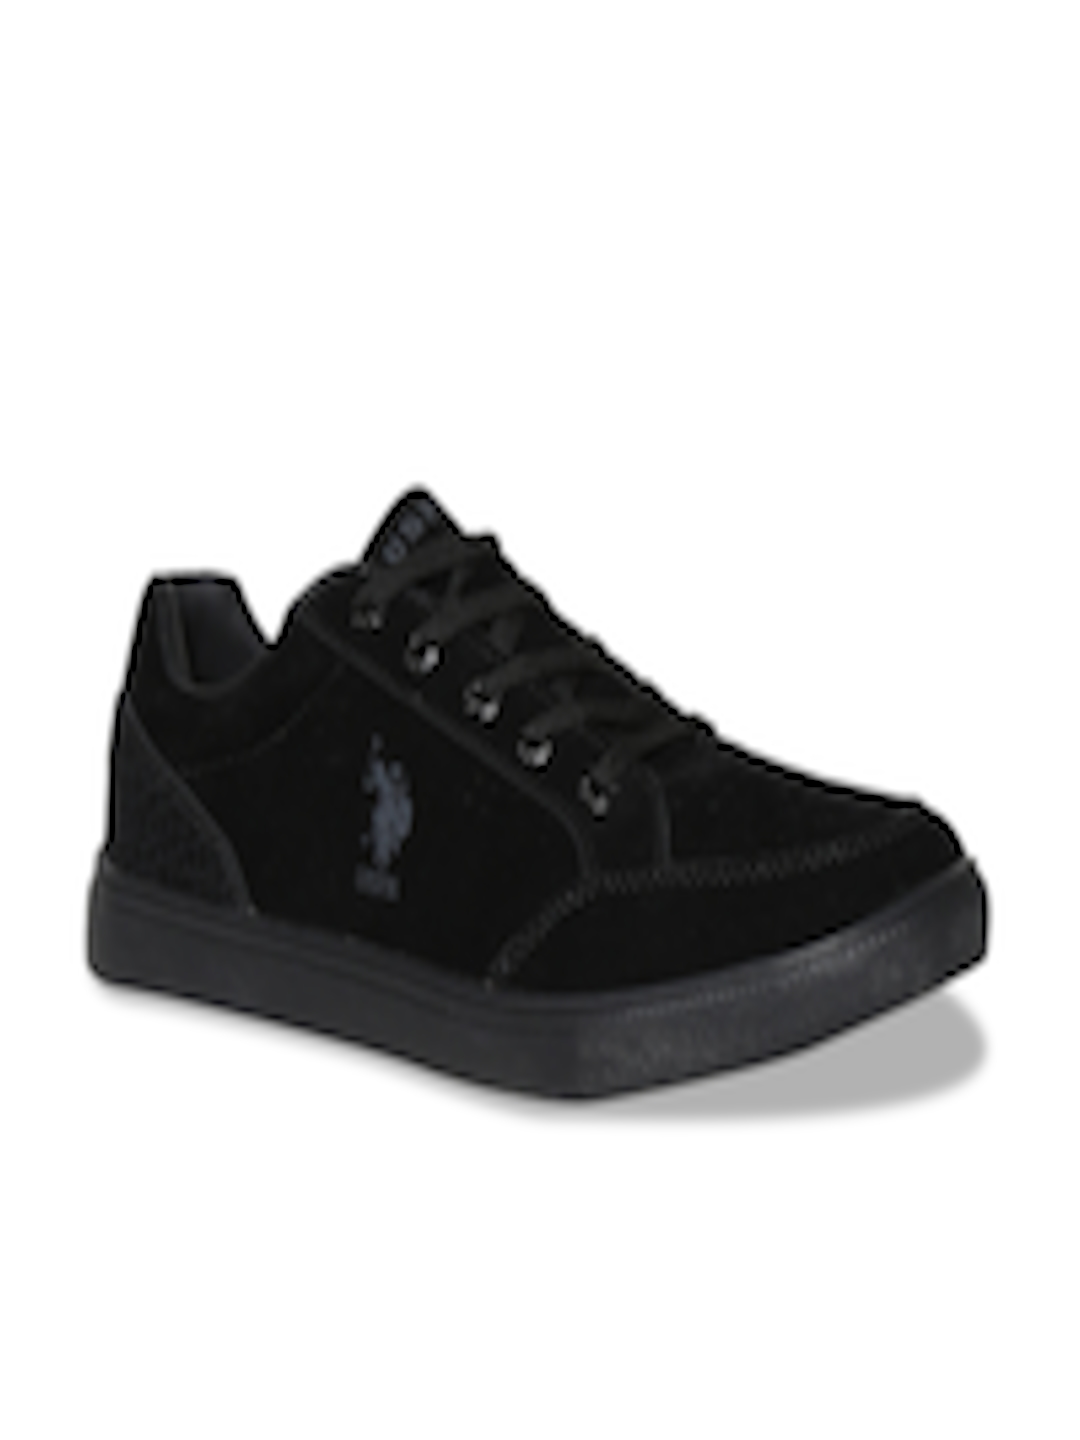 Buy U.S. Polo Assn. Men Black Sneakers - Casual Shoes for Men 11179026 ...